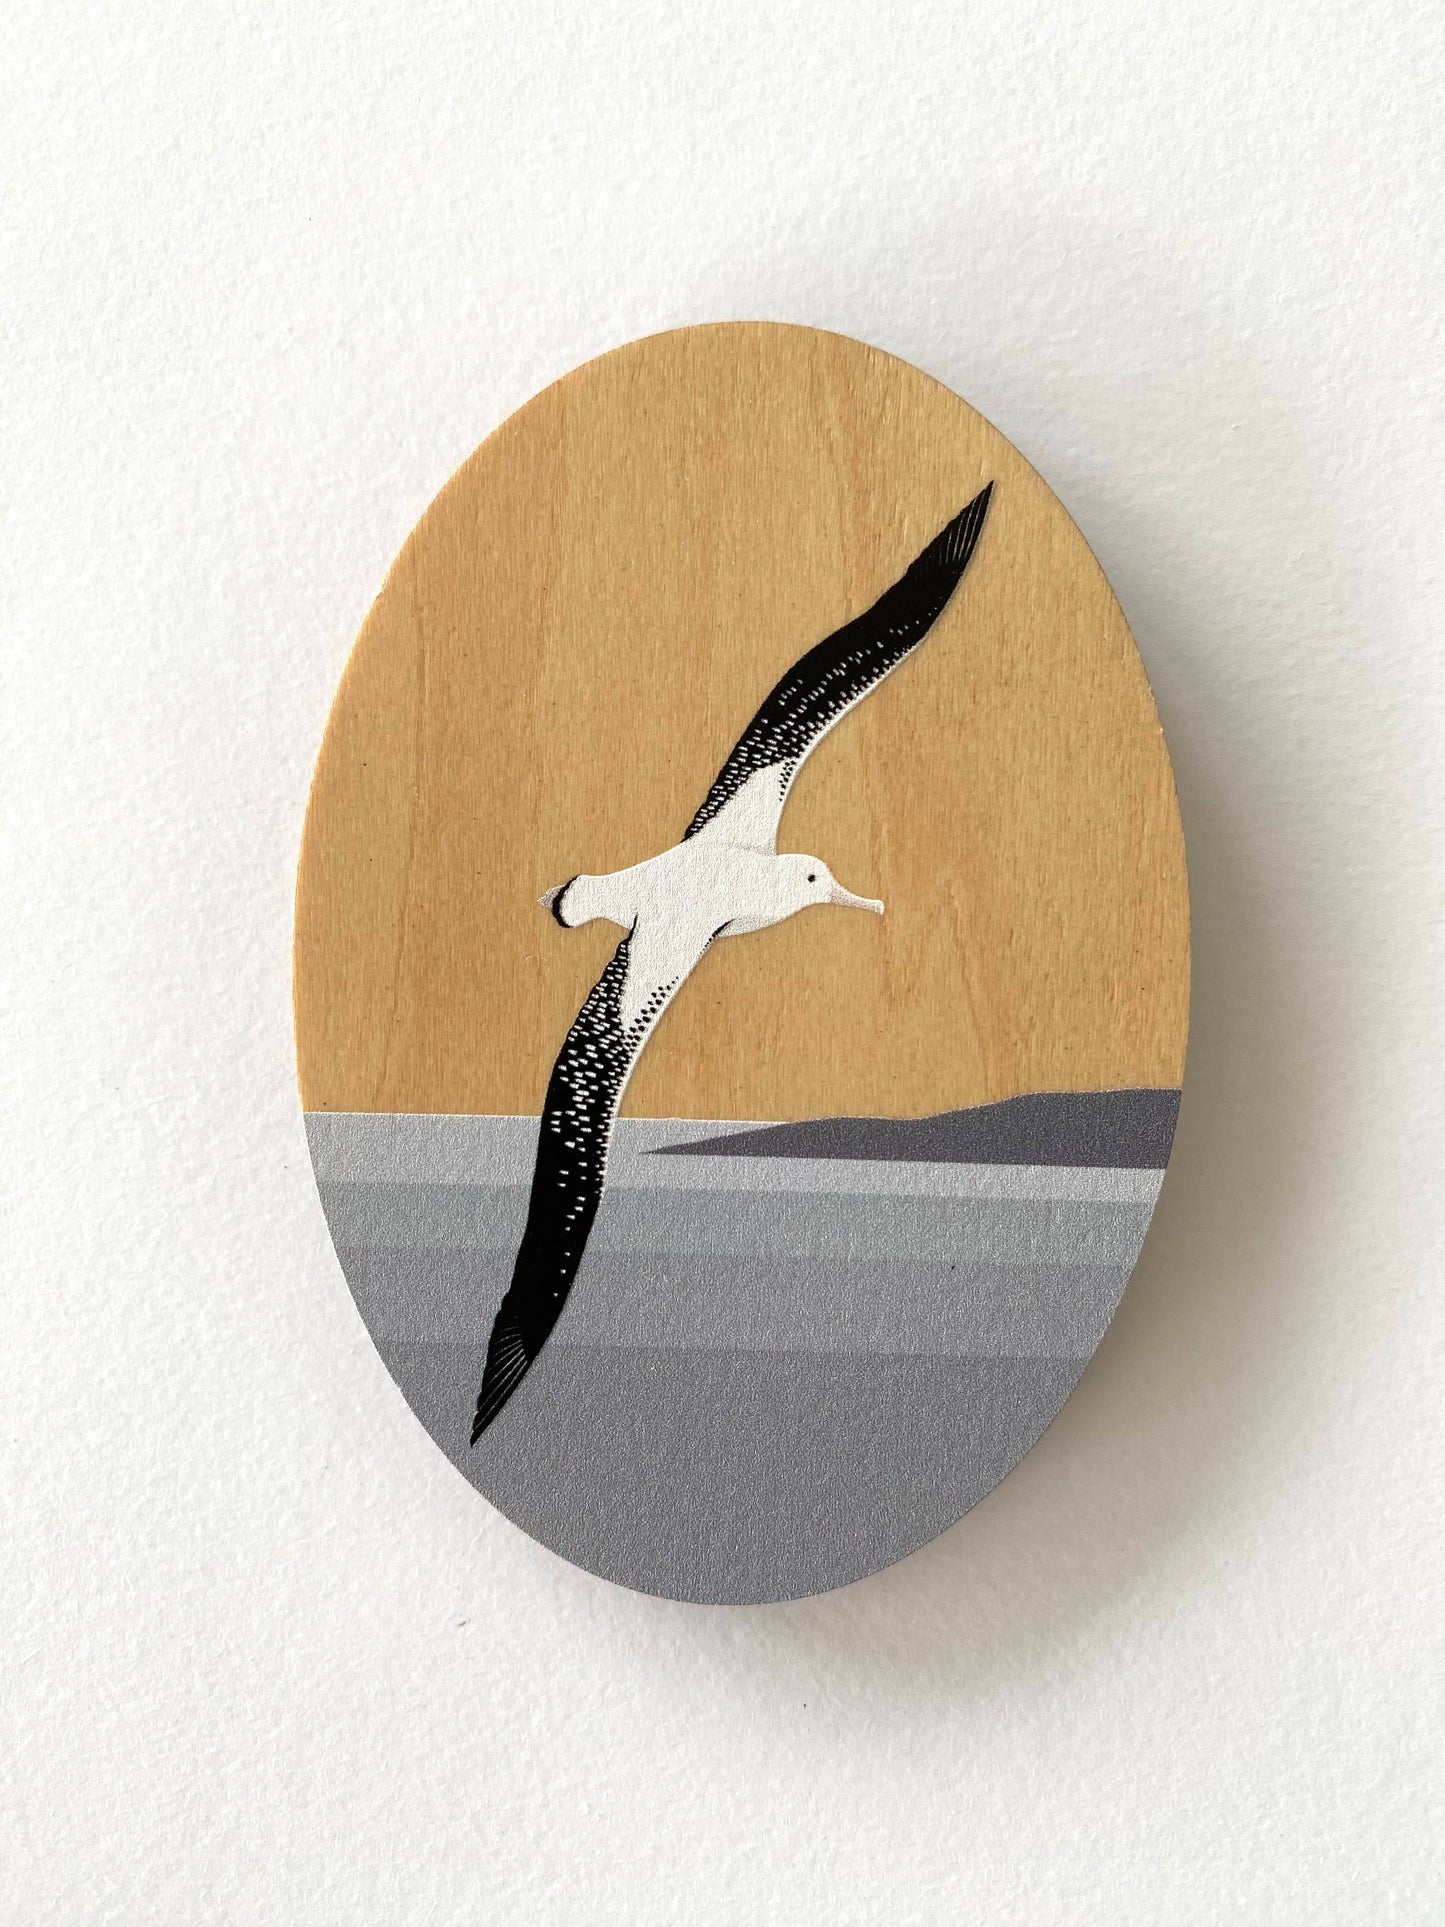 Albatross Wood Magnet art print by New Zealand artist Hansby Design